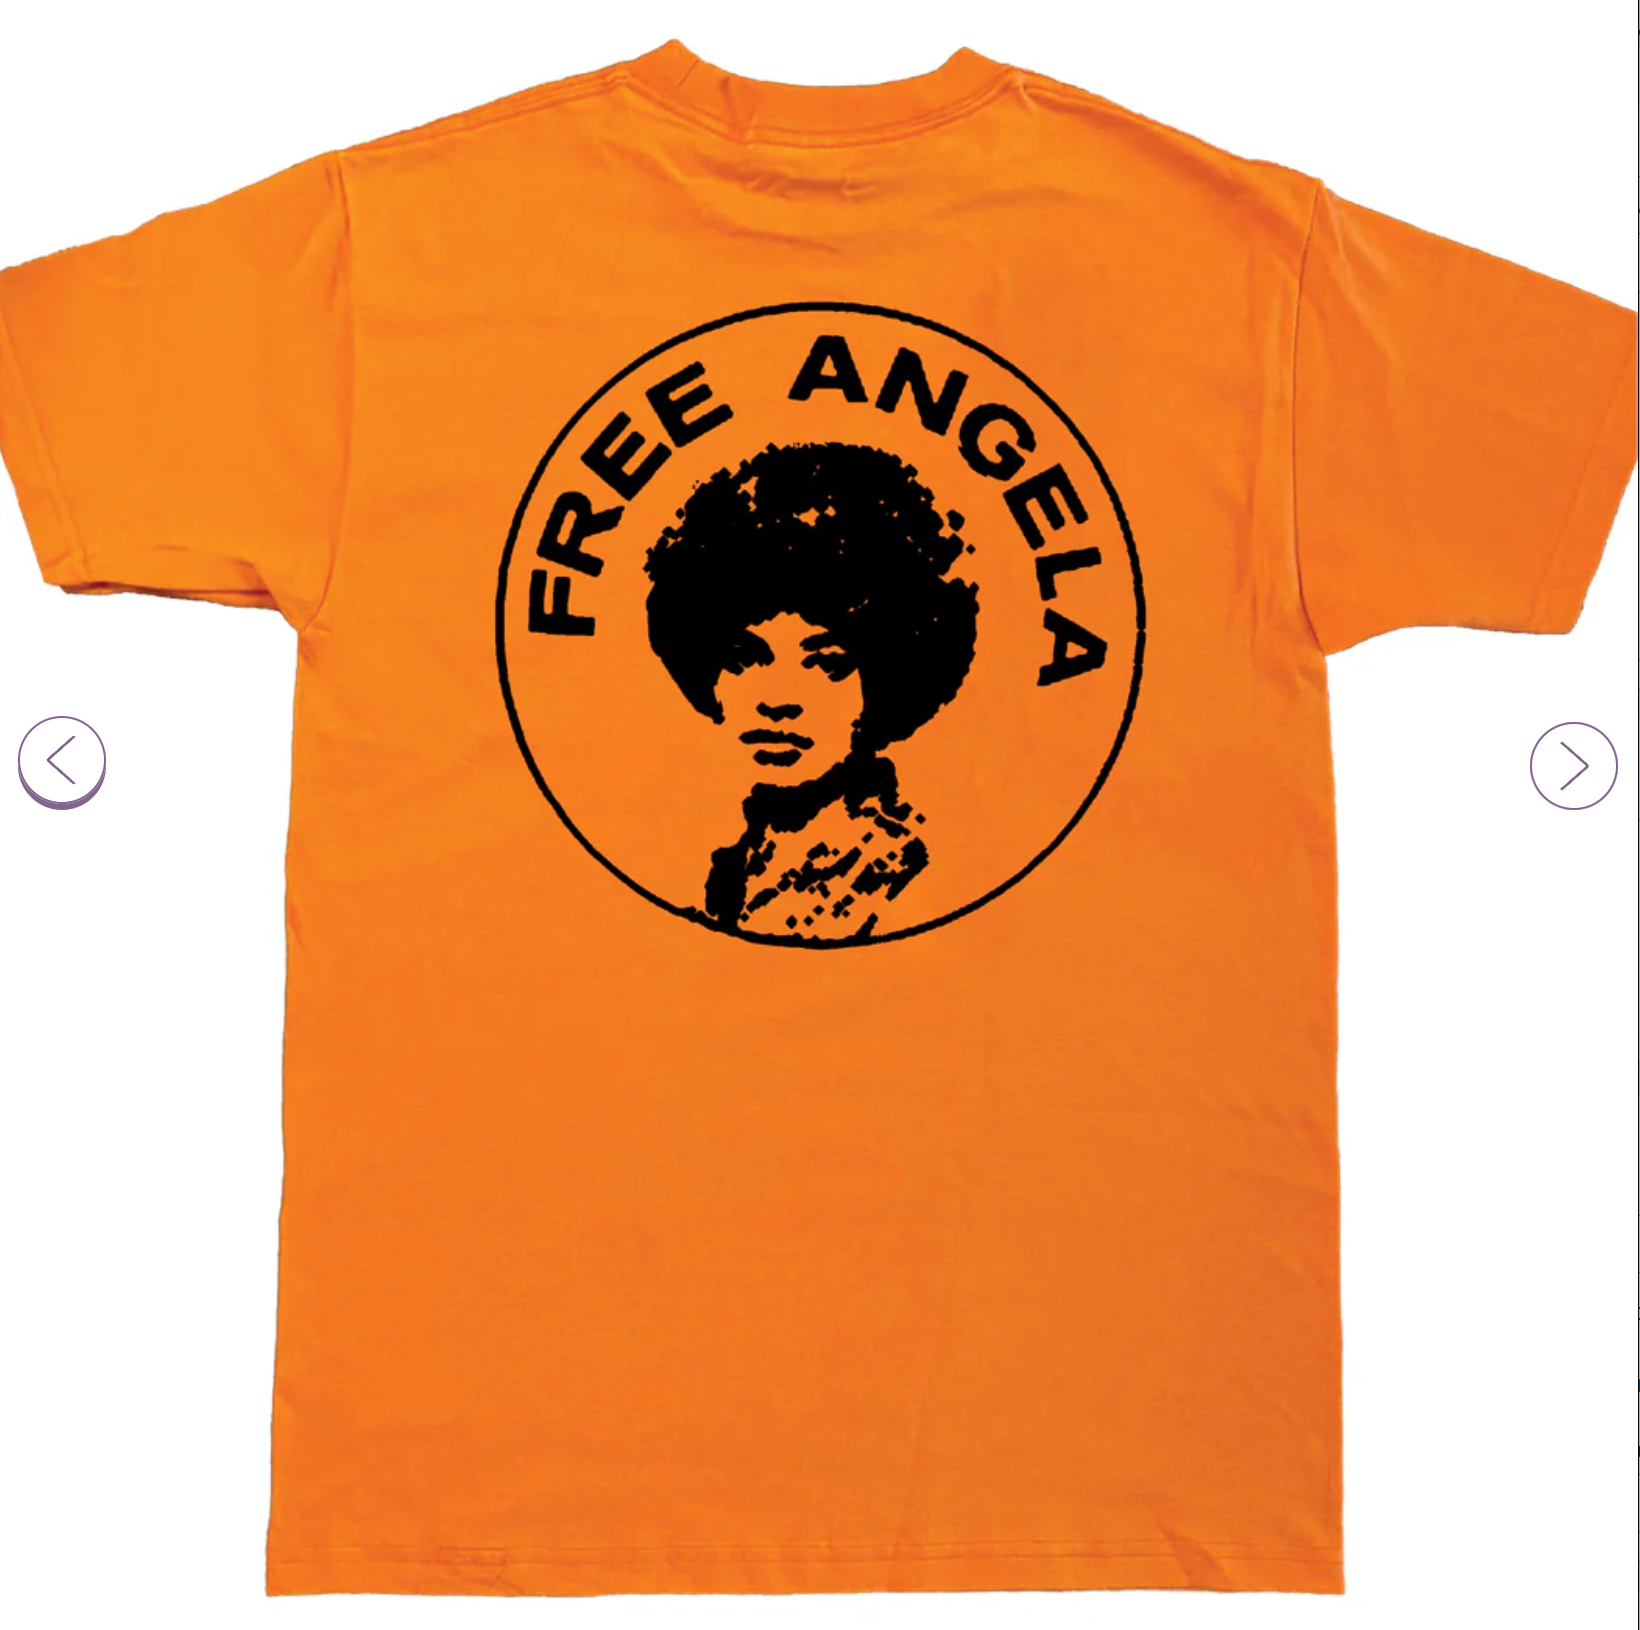 Free Angela Tee